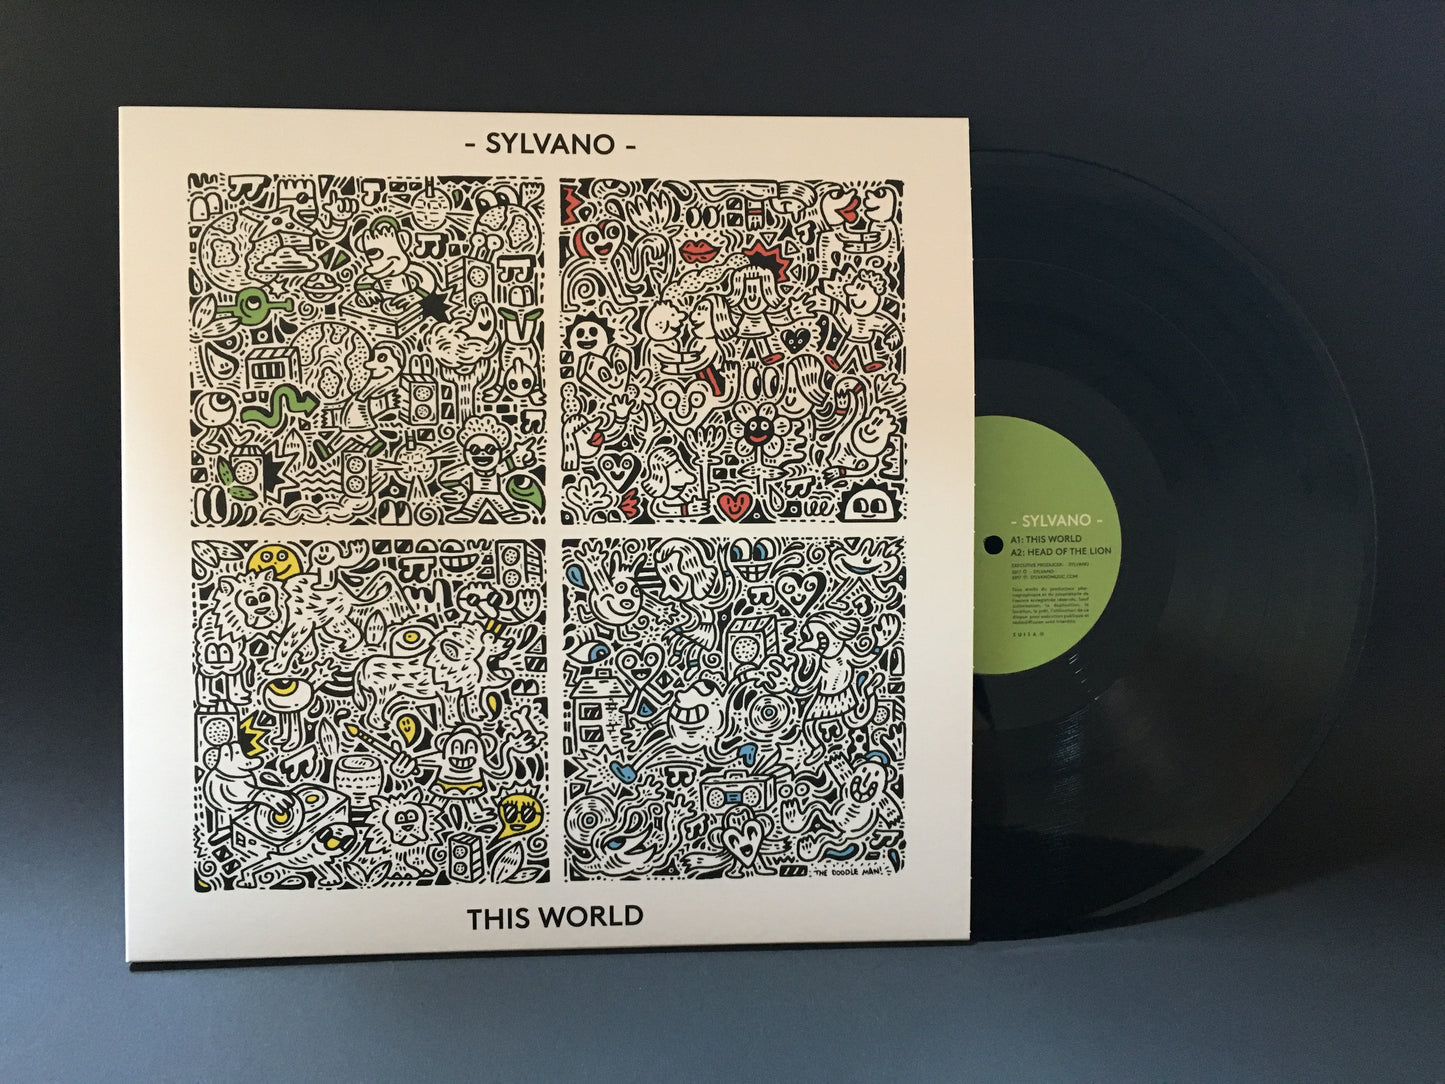 Mr. Doodle - Coverart LP/EP The World Silvano